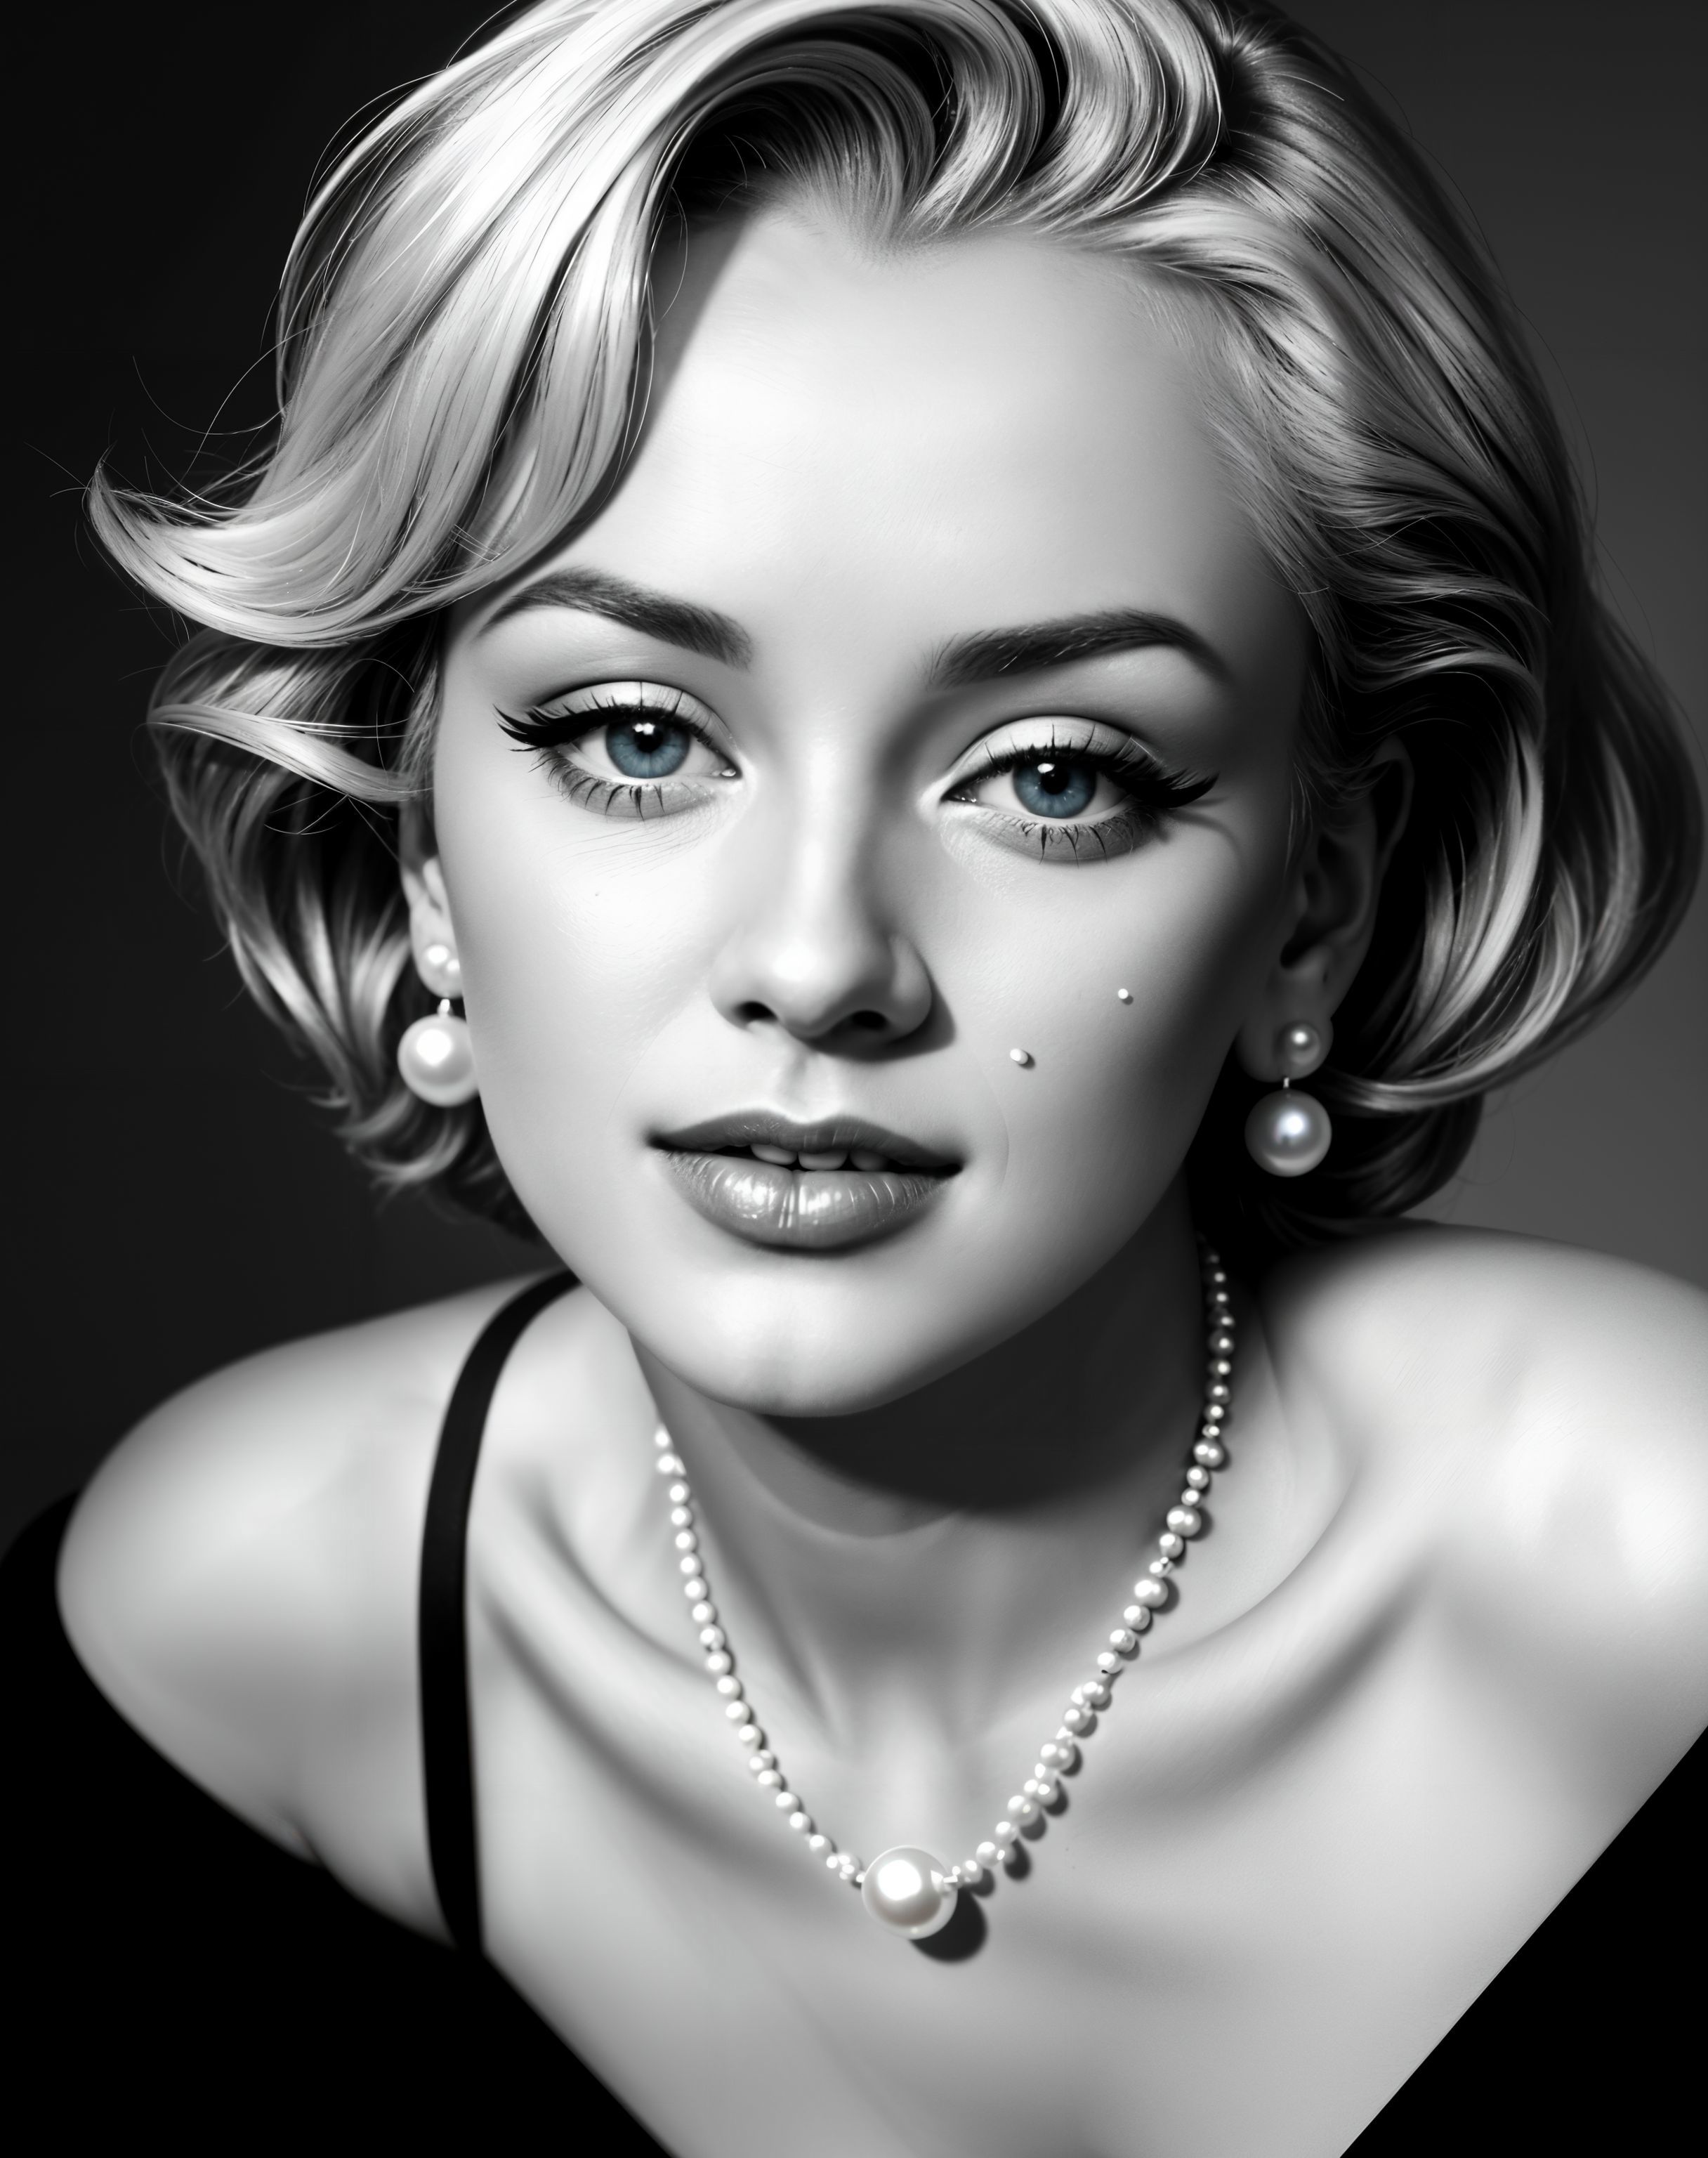 Marilyn Monroe image by Crash67